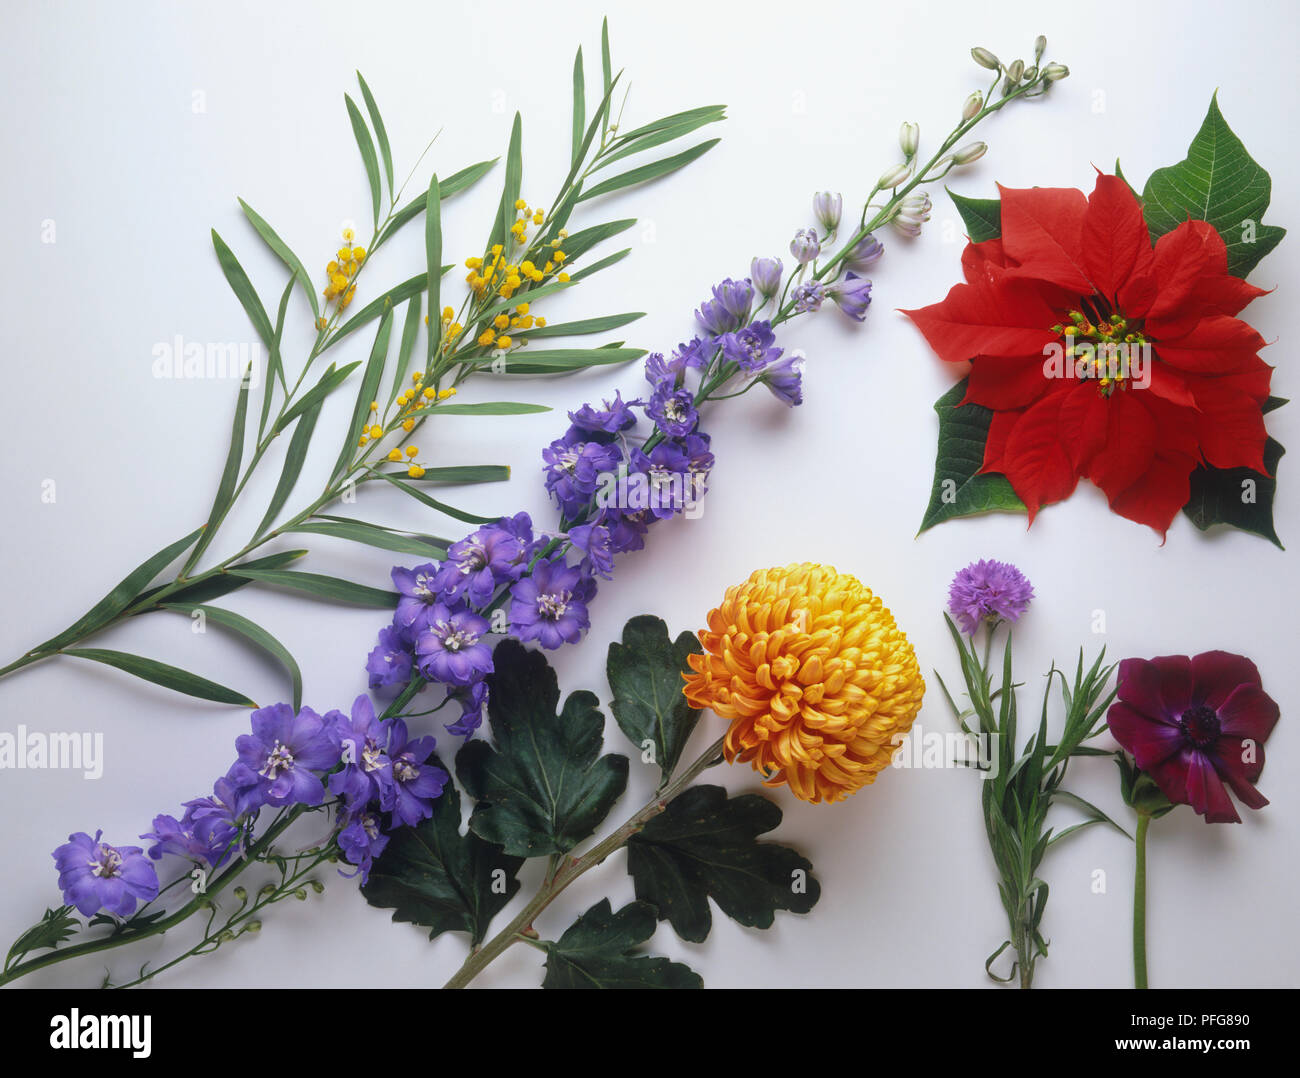 Various flower shapes, including Acacia longifolia (Golden wattle), Delphinium elatum (Delphinium), Chrysanthemum hybrid, Euphorbia pulcherrima (Poinsettia), Centaurea cyanus (Cornflower), Anemone Coronaria (Poppy anemone) Stock Photo